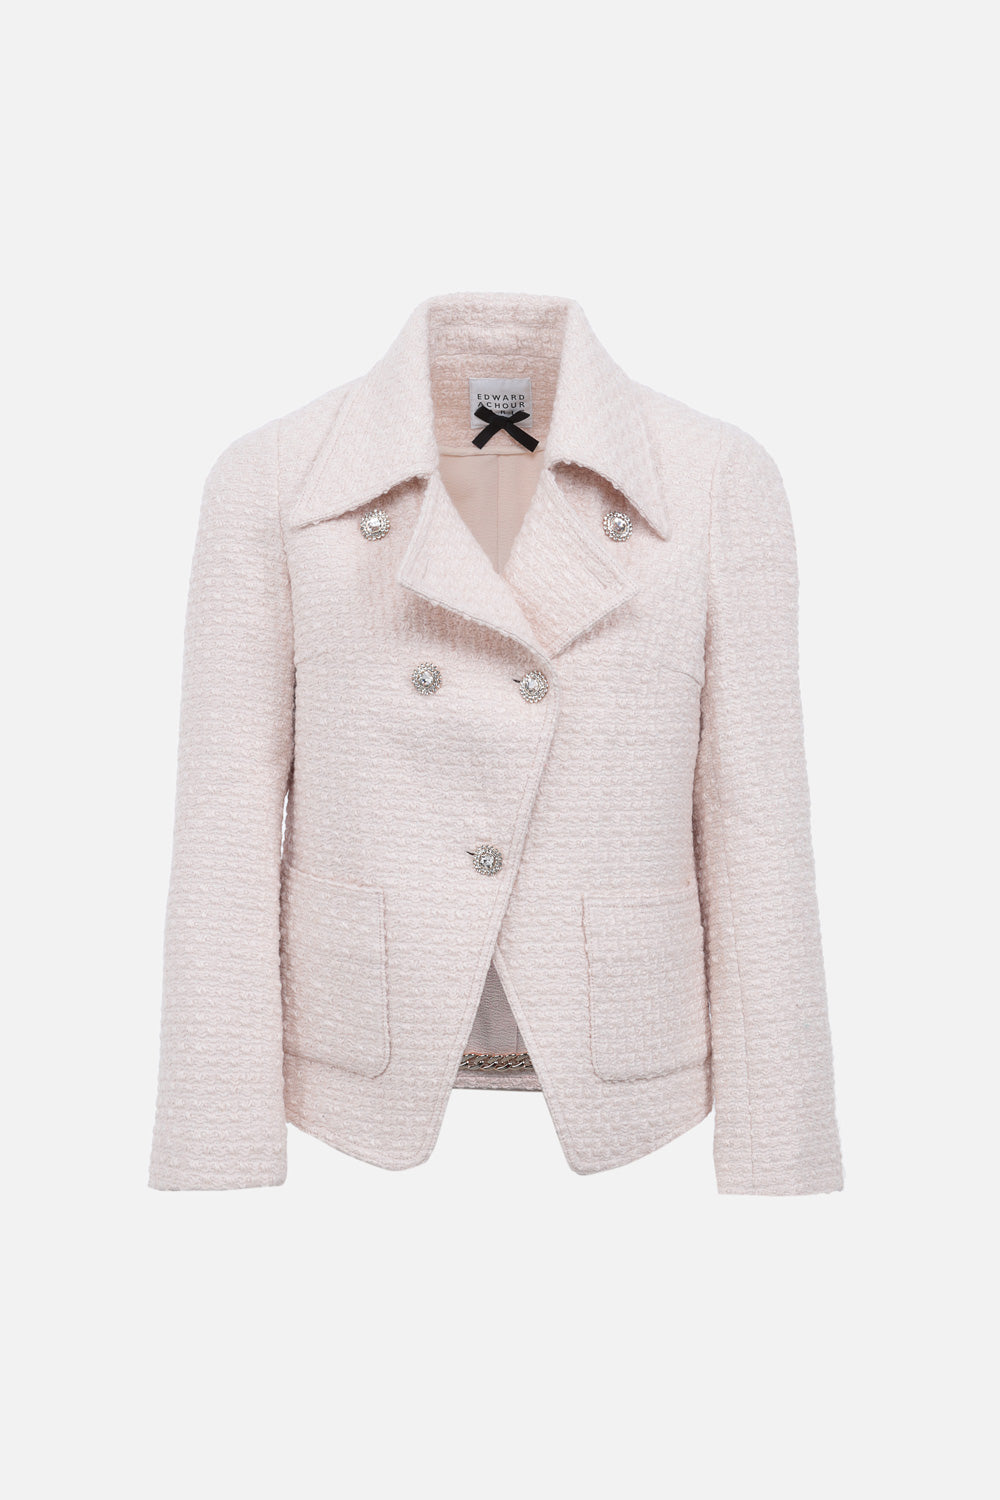 Powder pink tweed jacket